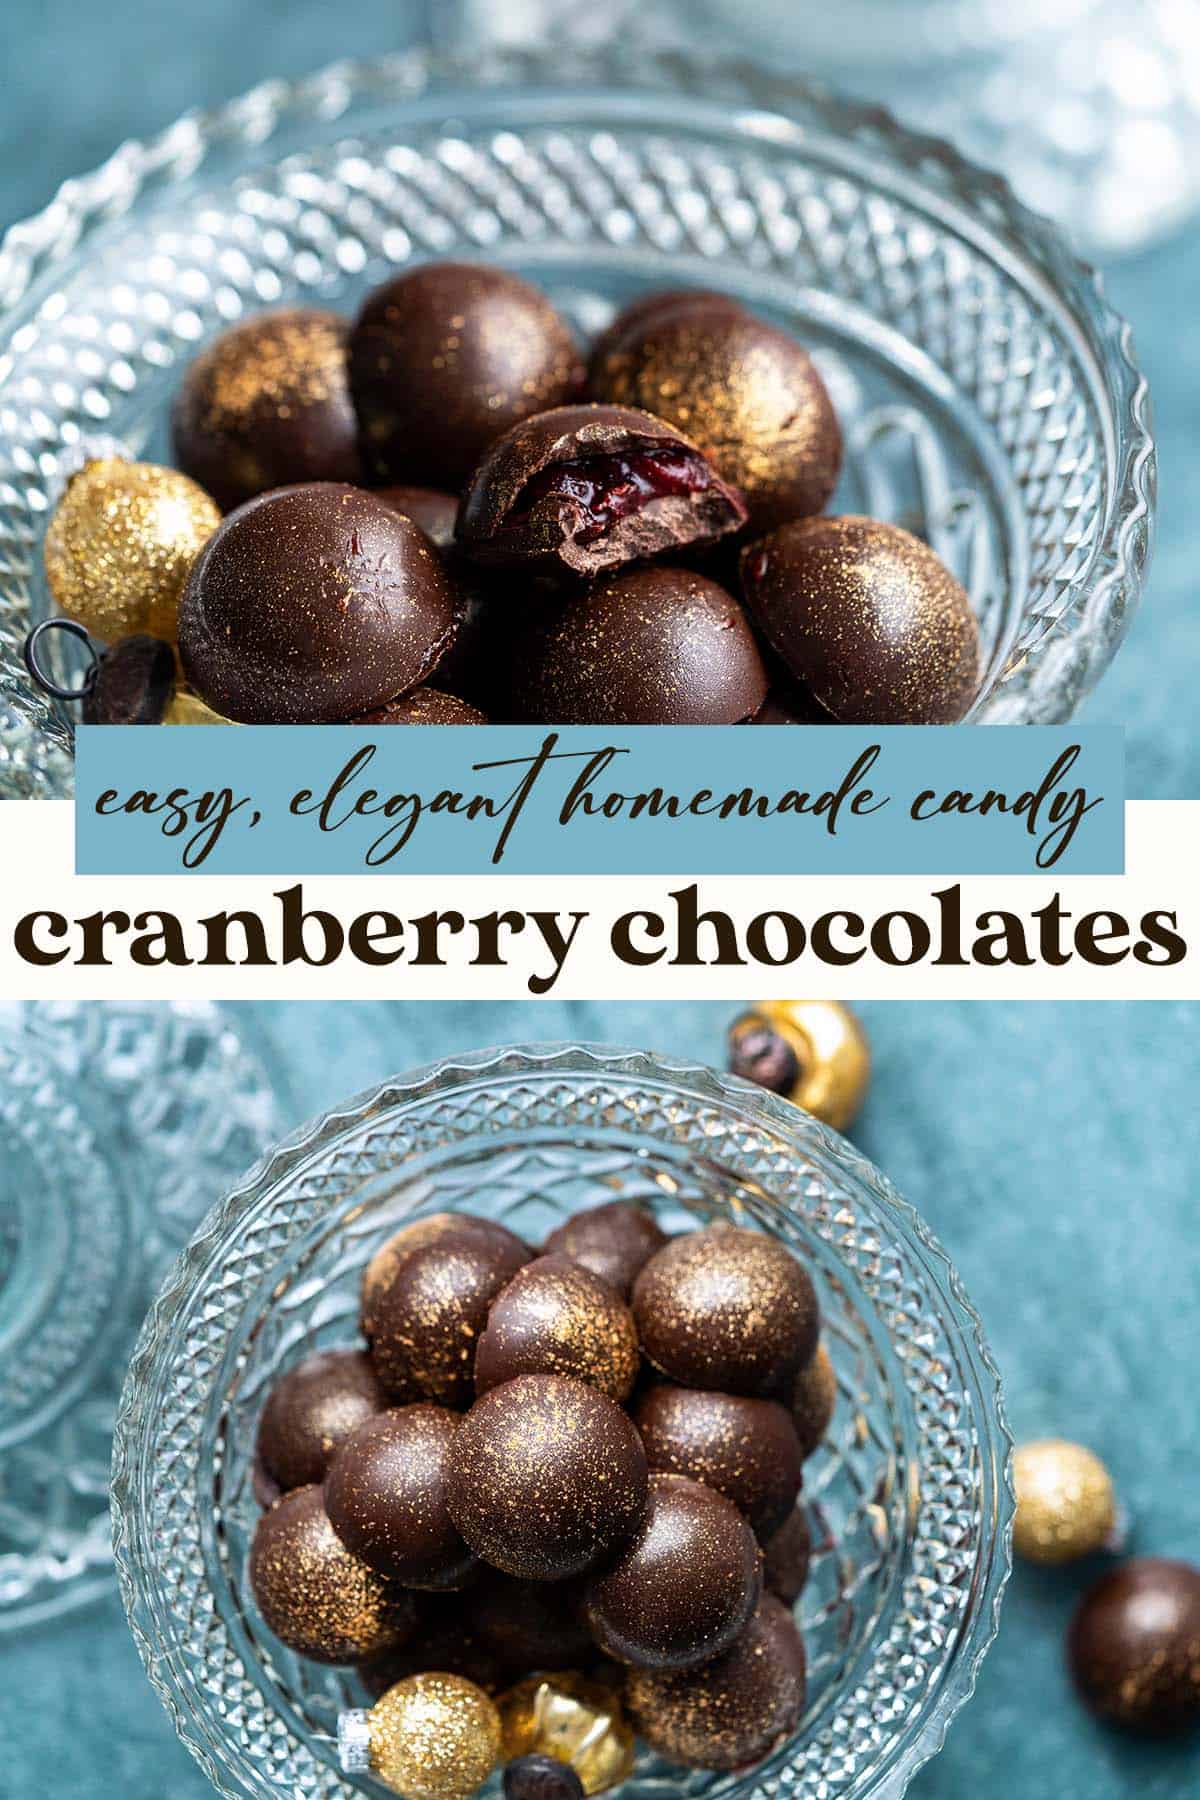 cranberry chocolates recipe pin